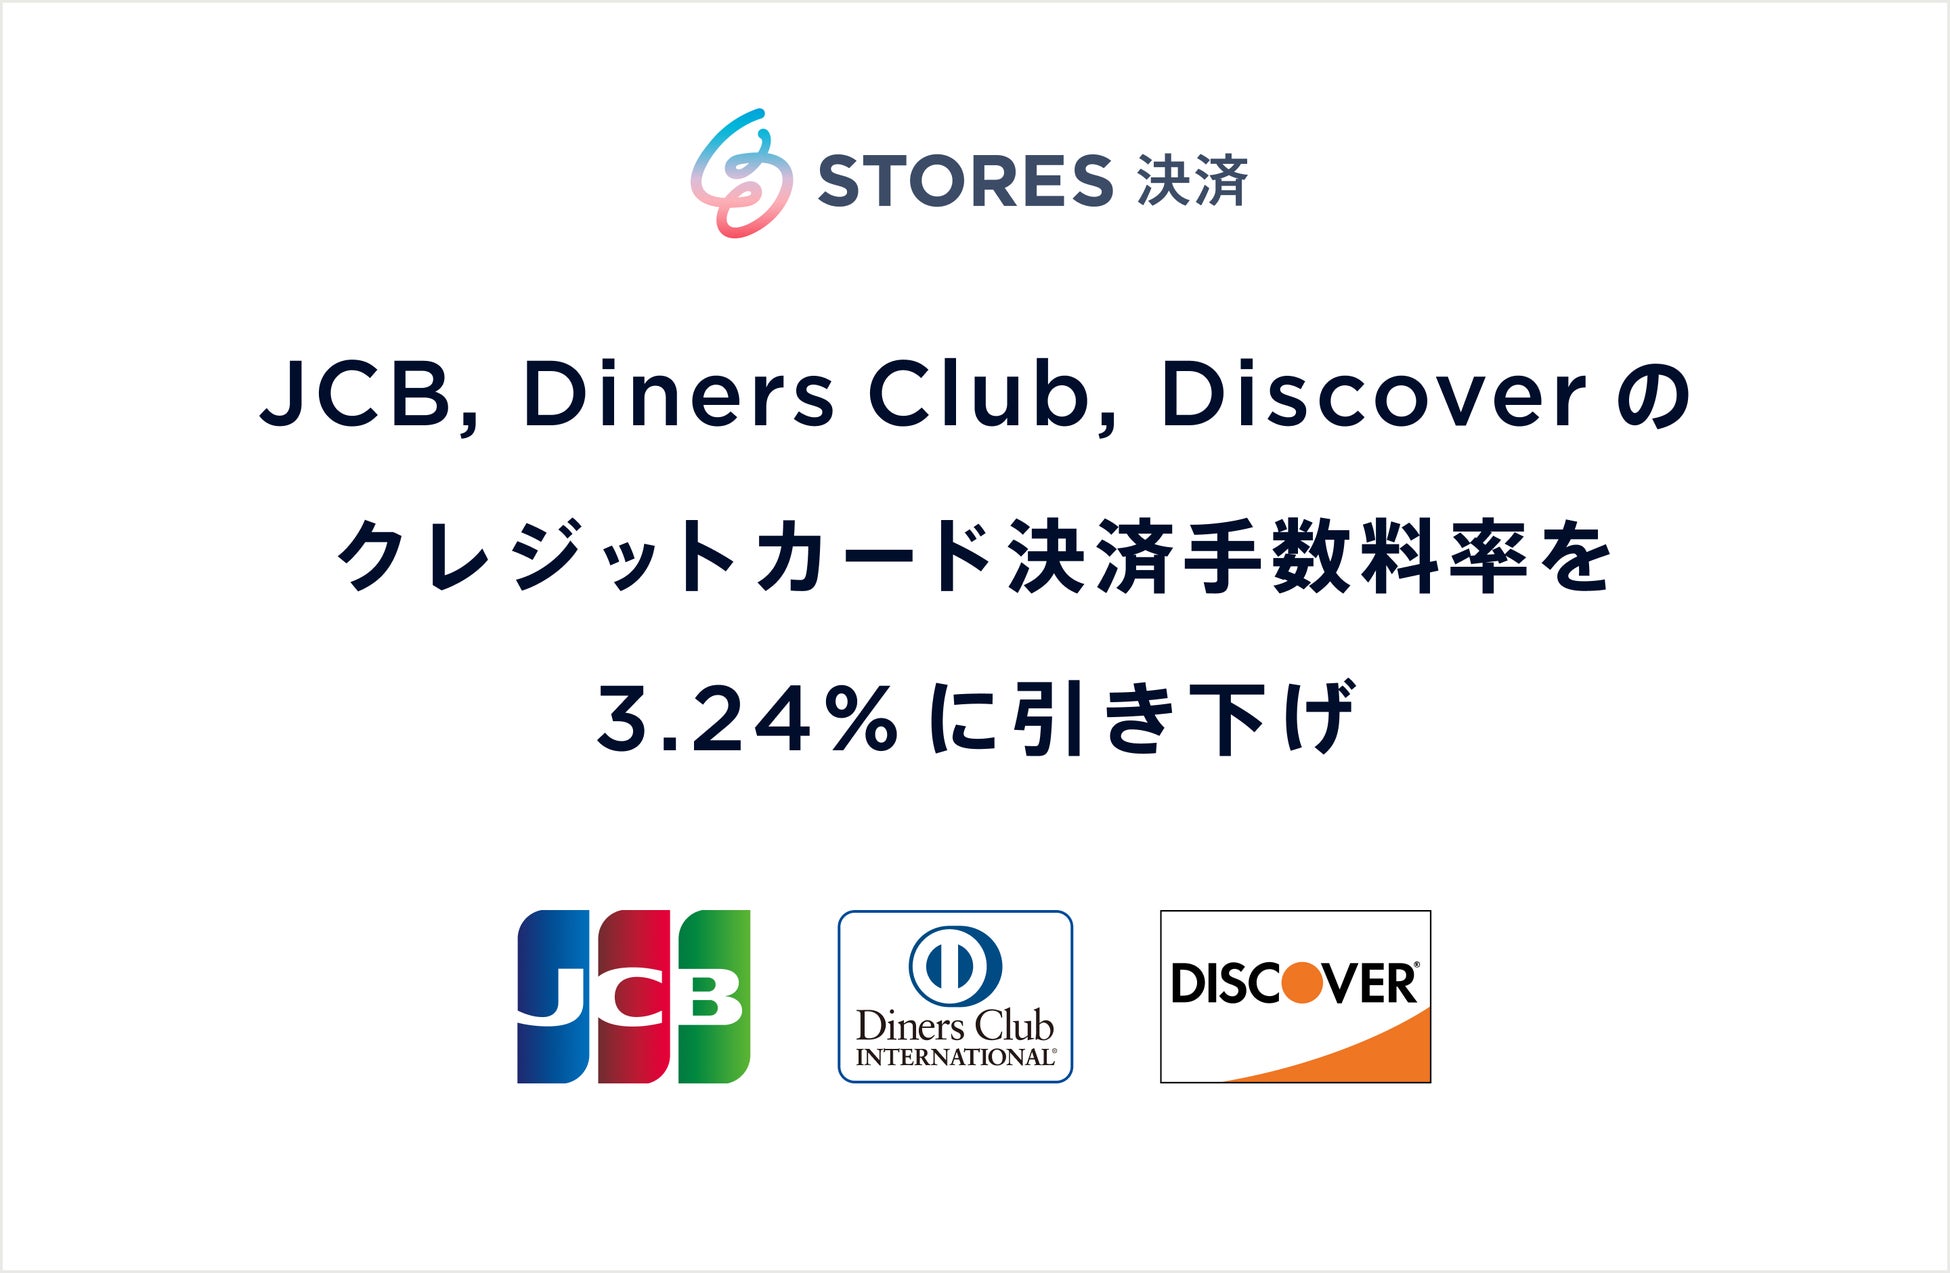 STORES 決済、JCB・Diners Club・Discover のクレジットカード決済手数料率を 3.24% に引き下げ